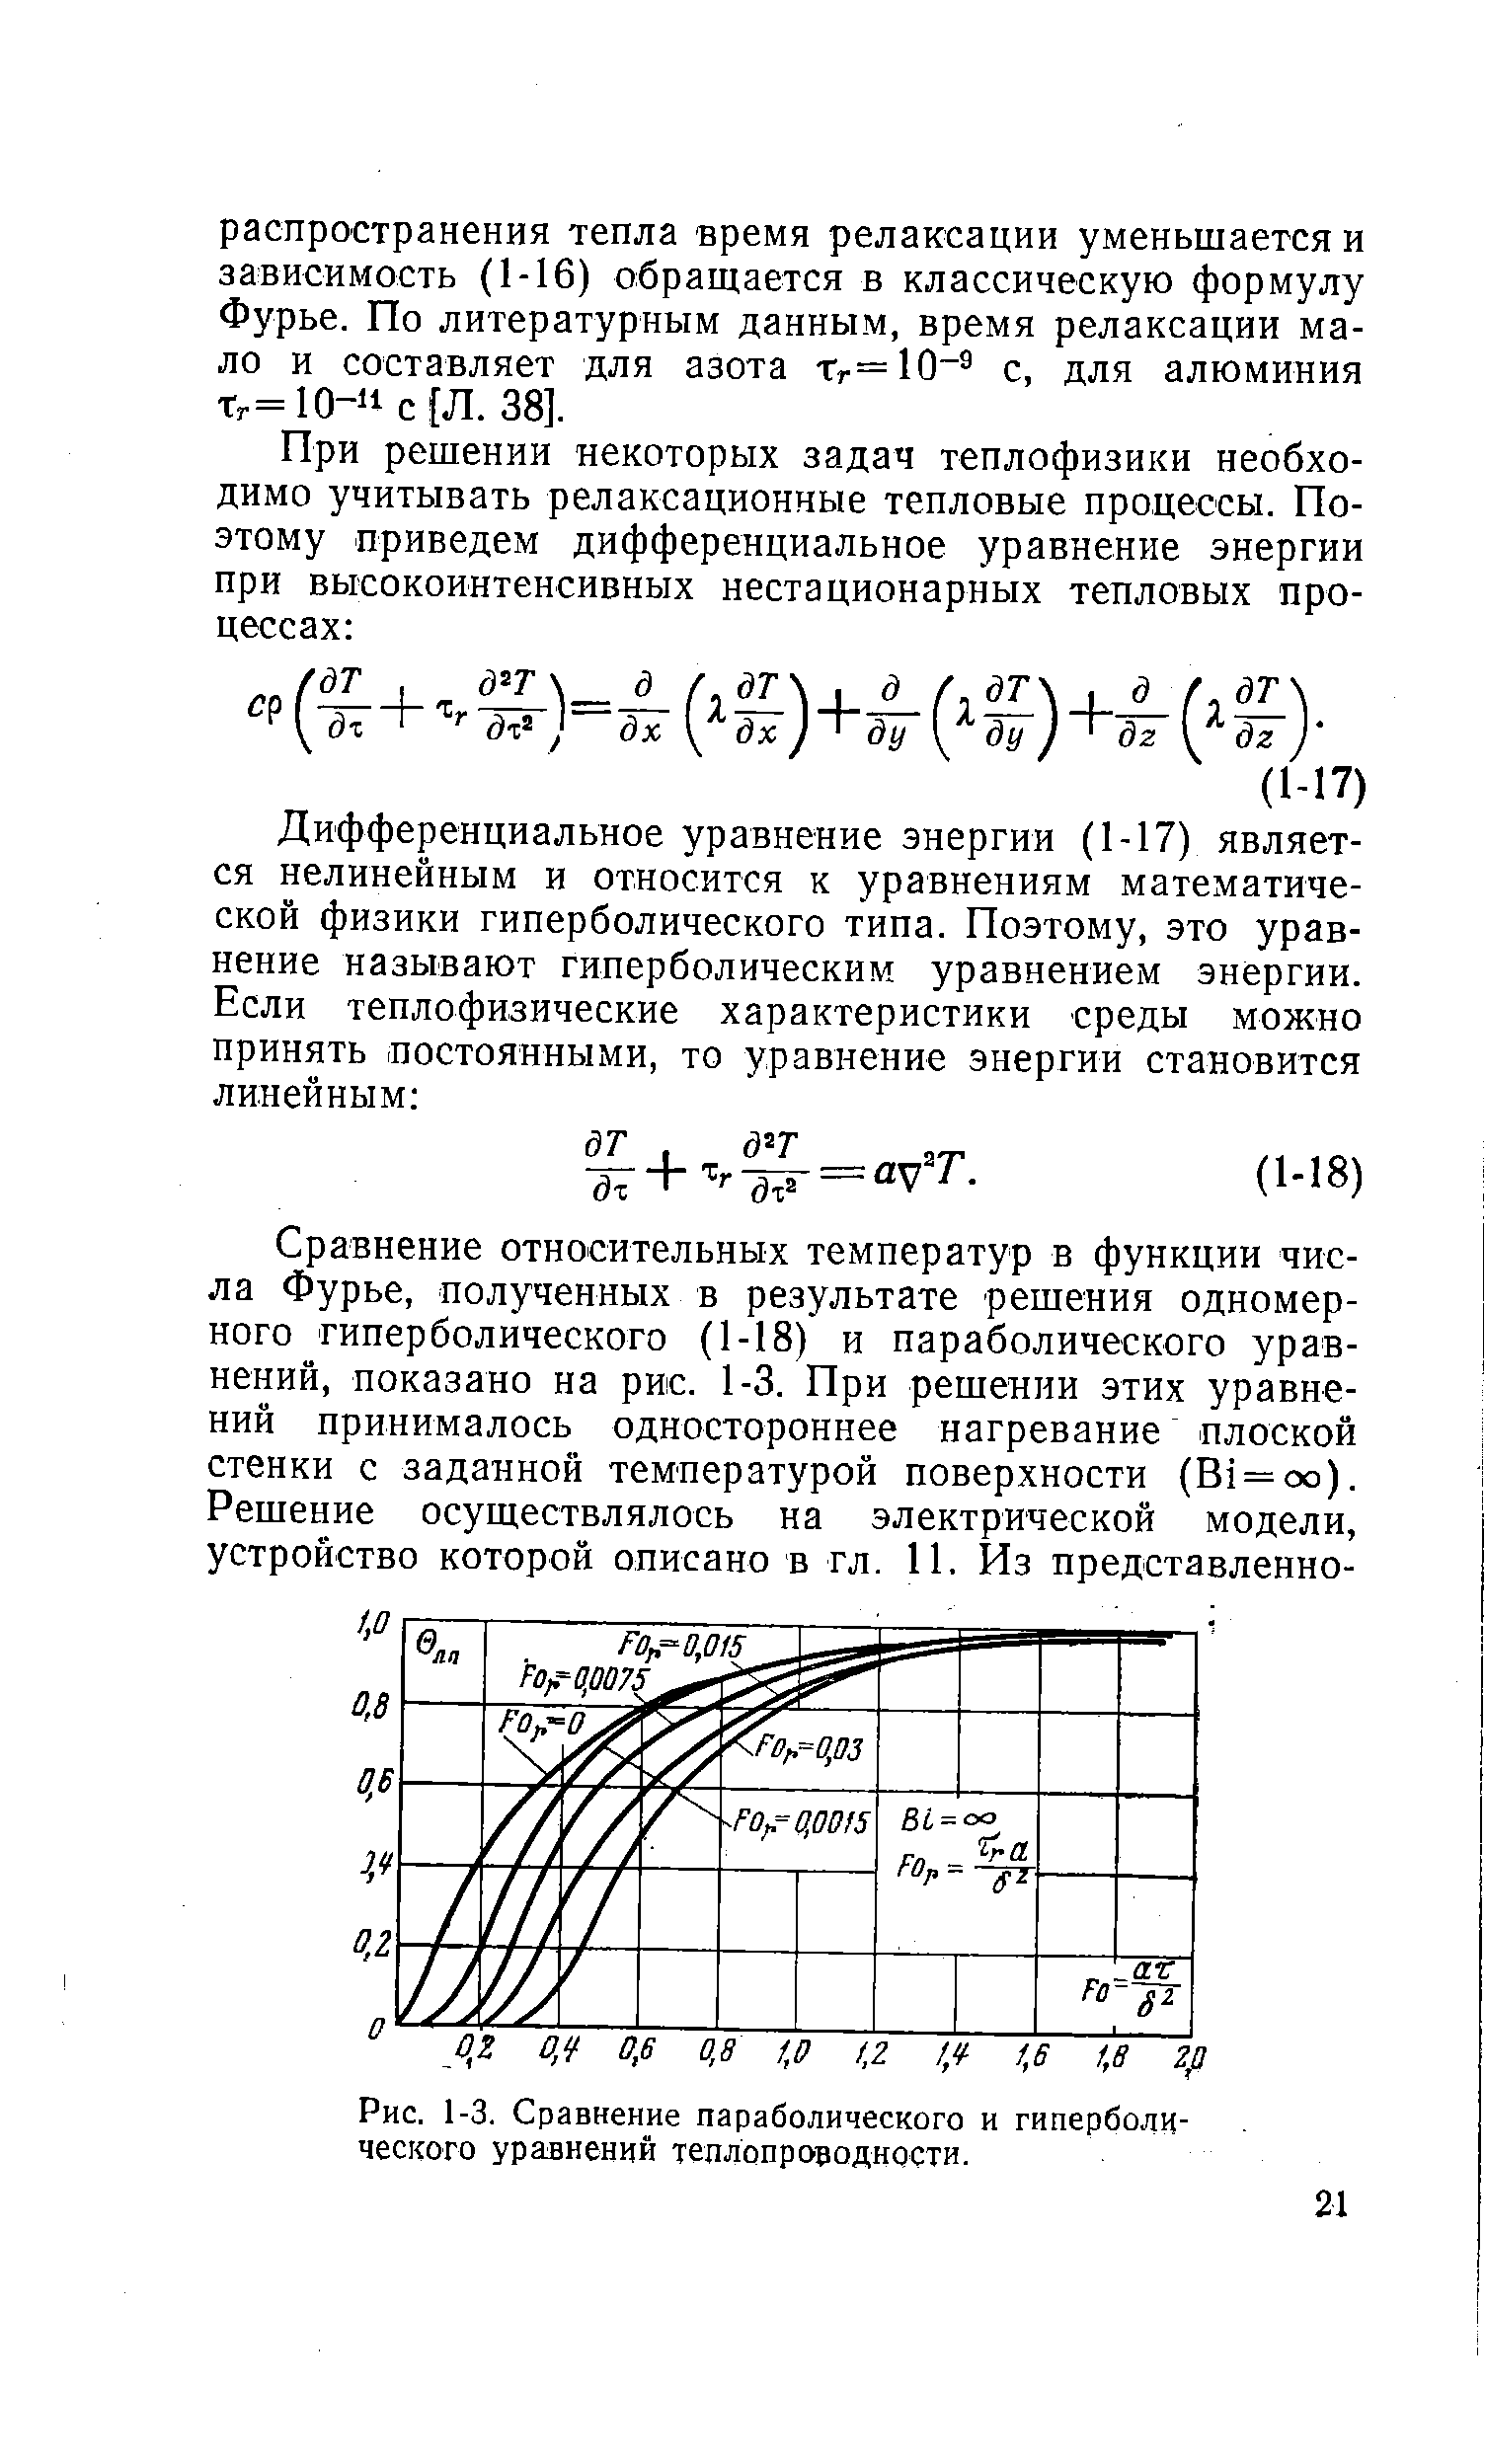 Рис. 1-3. Сравнение параболического и <a href="/info/83359">гиперболического уравнений</a> теплопроводности.
